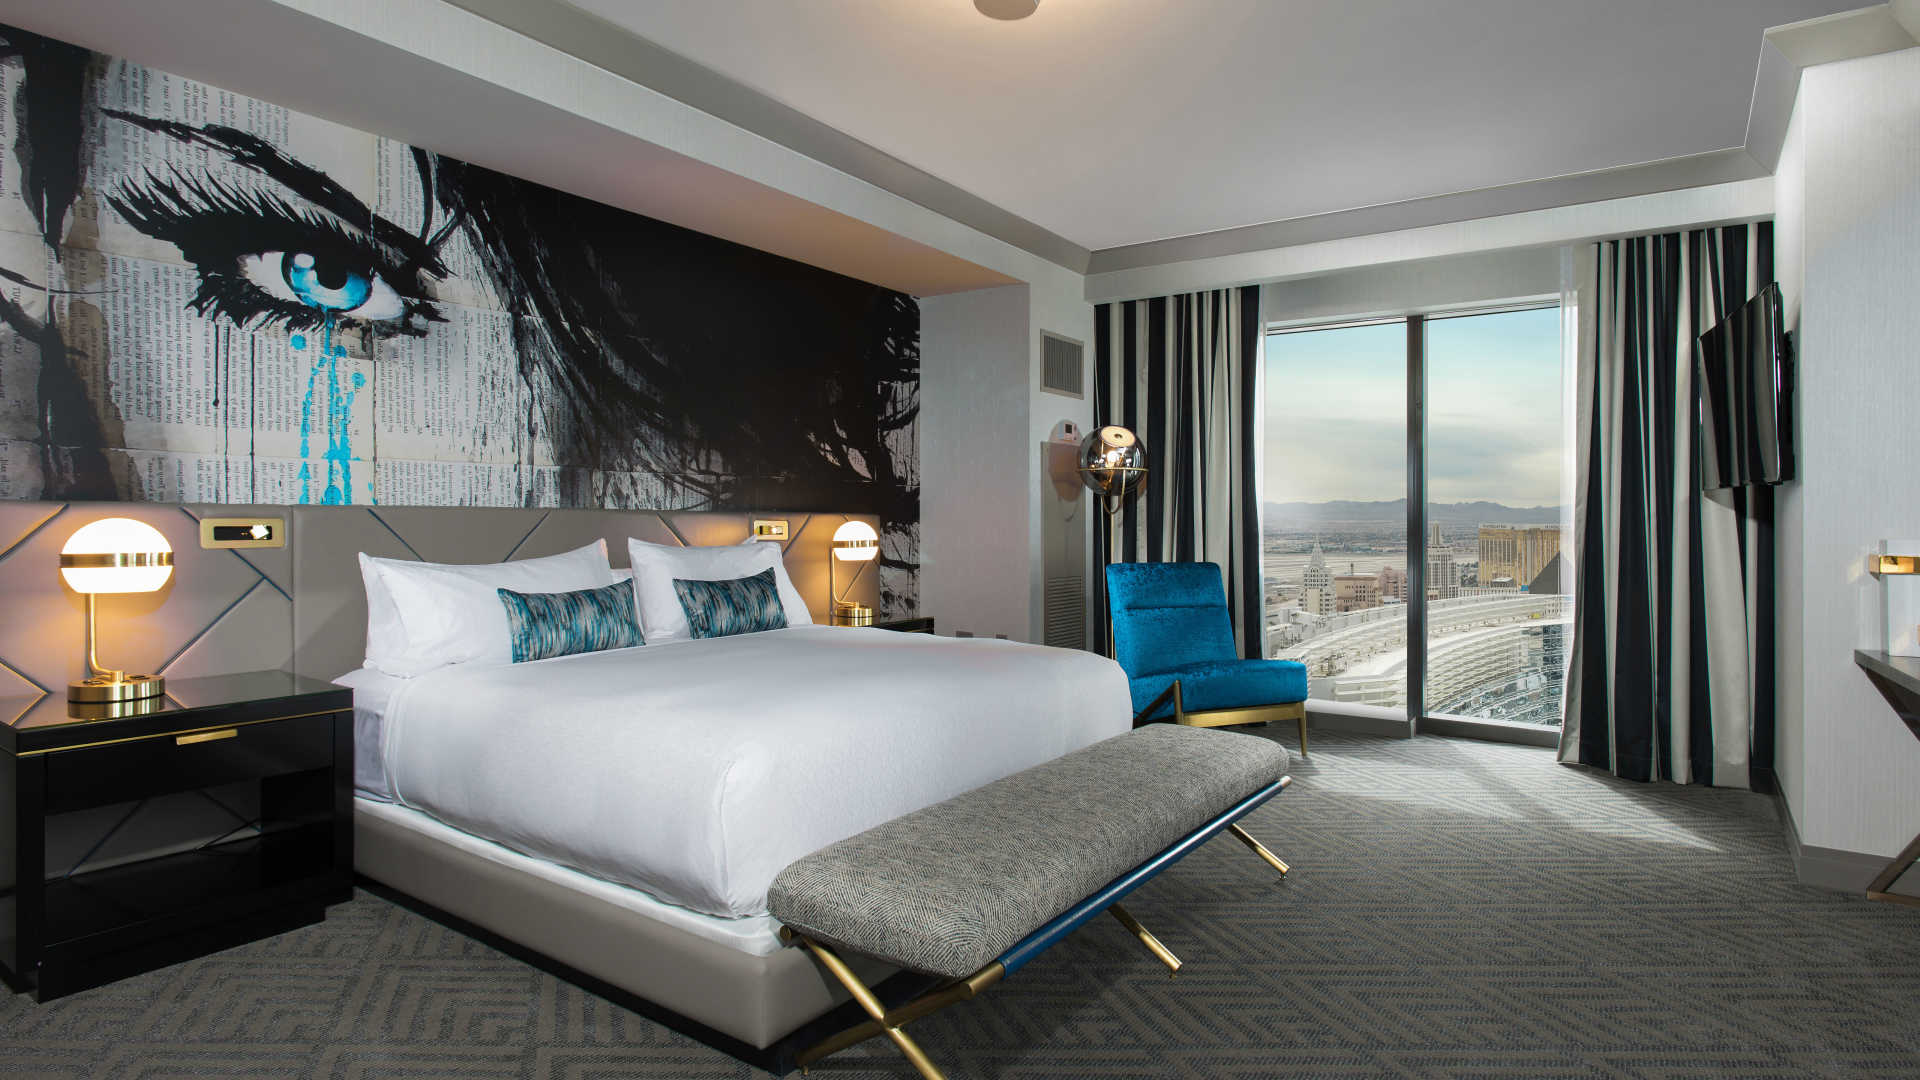 Las Vegas 2 Bedroom Hotel&Suites Two Bedroom Suite Downtown Las Vegas Plaza Hotel Casino